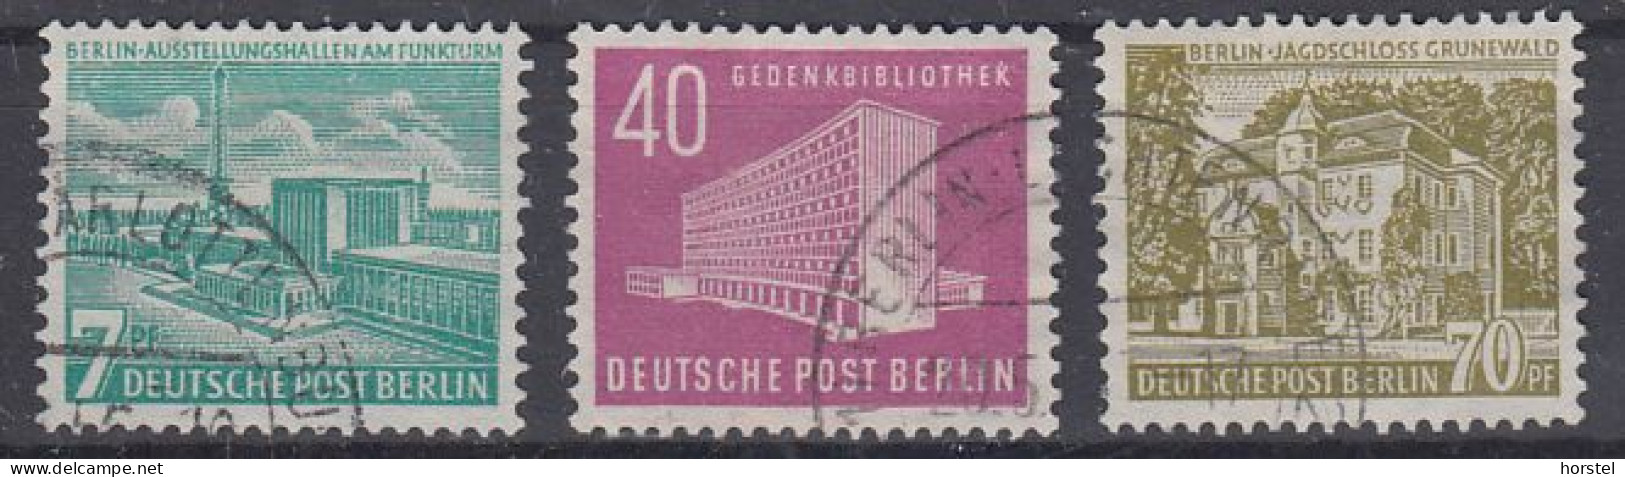 Deutschland Mi 121-23 Berliner Bauten - Amerika Gedenkbibliothek - Jagdschloß Grunewald - Funkturm - Gebruikt